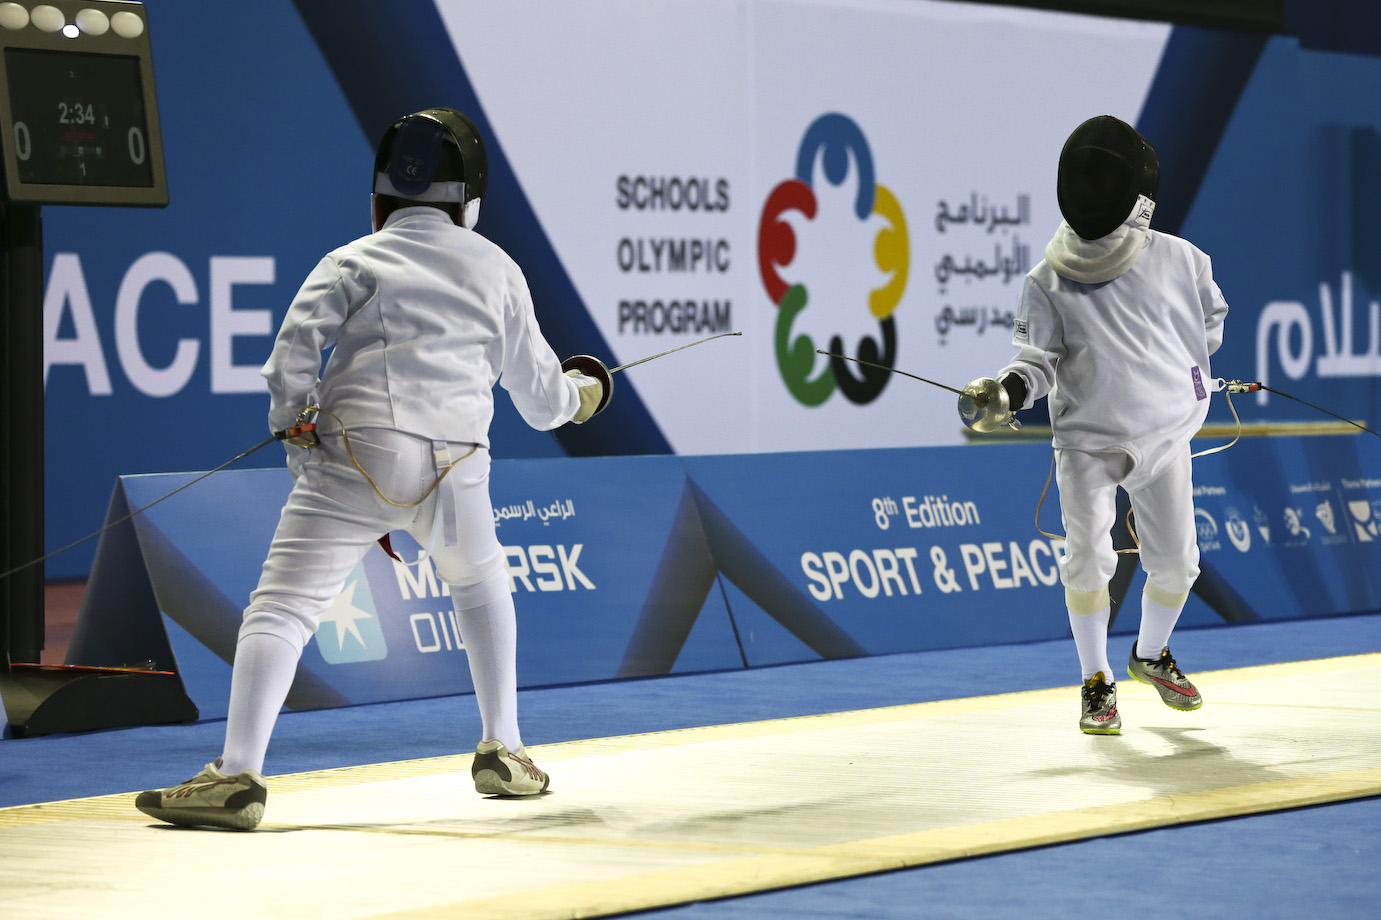 Sheikh Saoud Bin Abdulrahman Al-Thani, secretary general of the Qatar Olympic Committee, believes the Schools Olympic Programme is in keeping with the IOC's Agenda 2020 reforms ©Qatar Olympic Committee